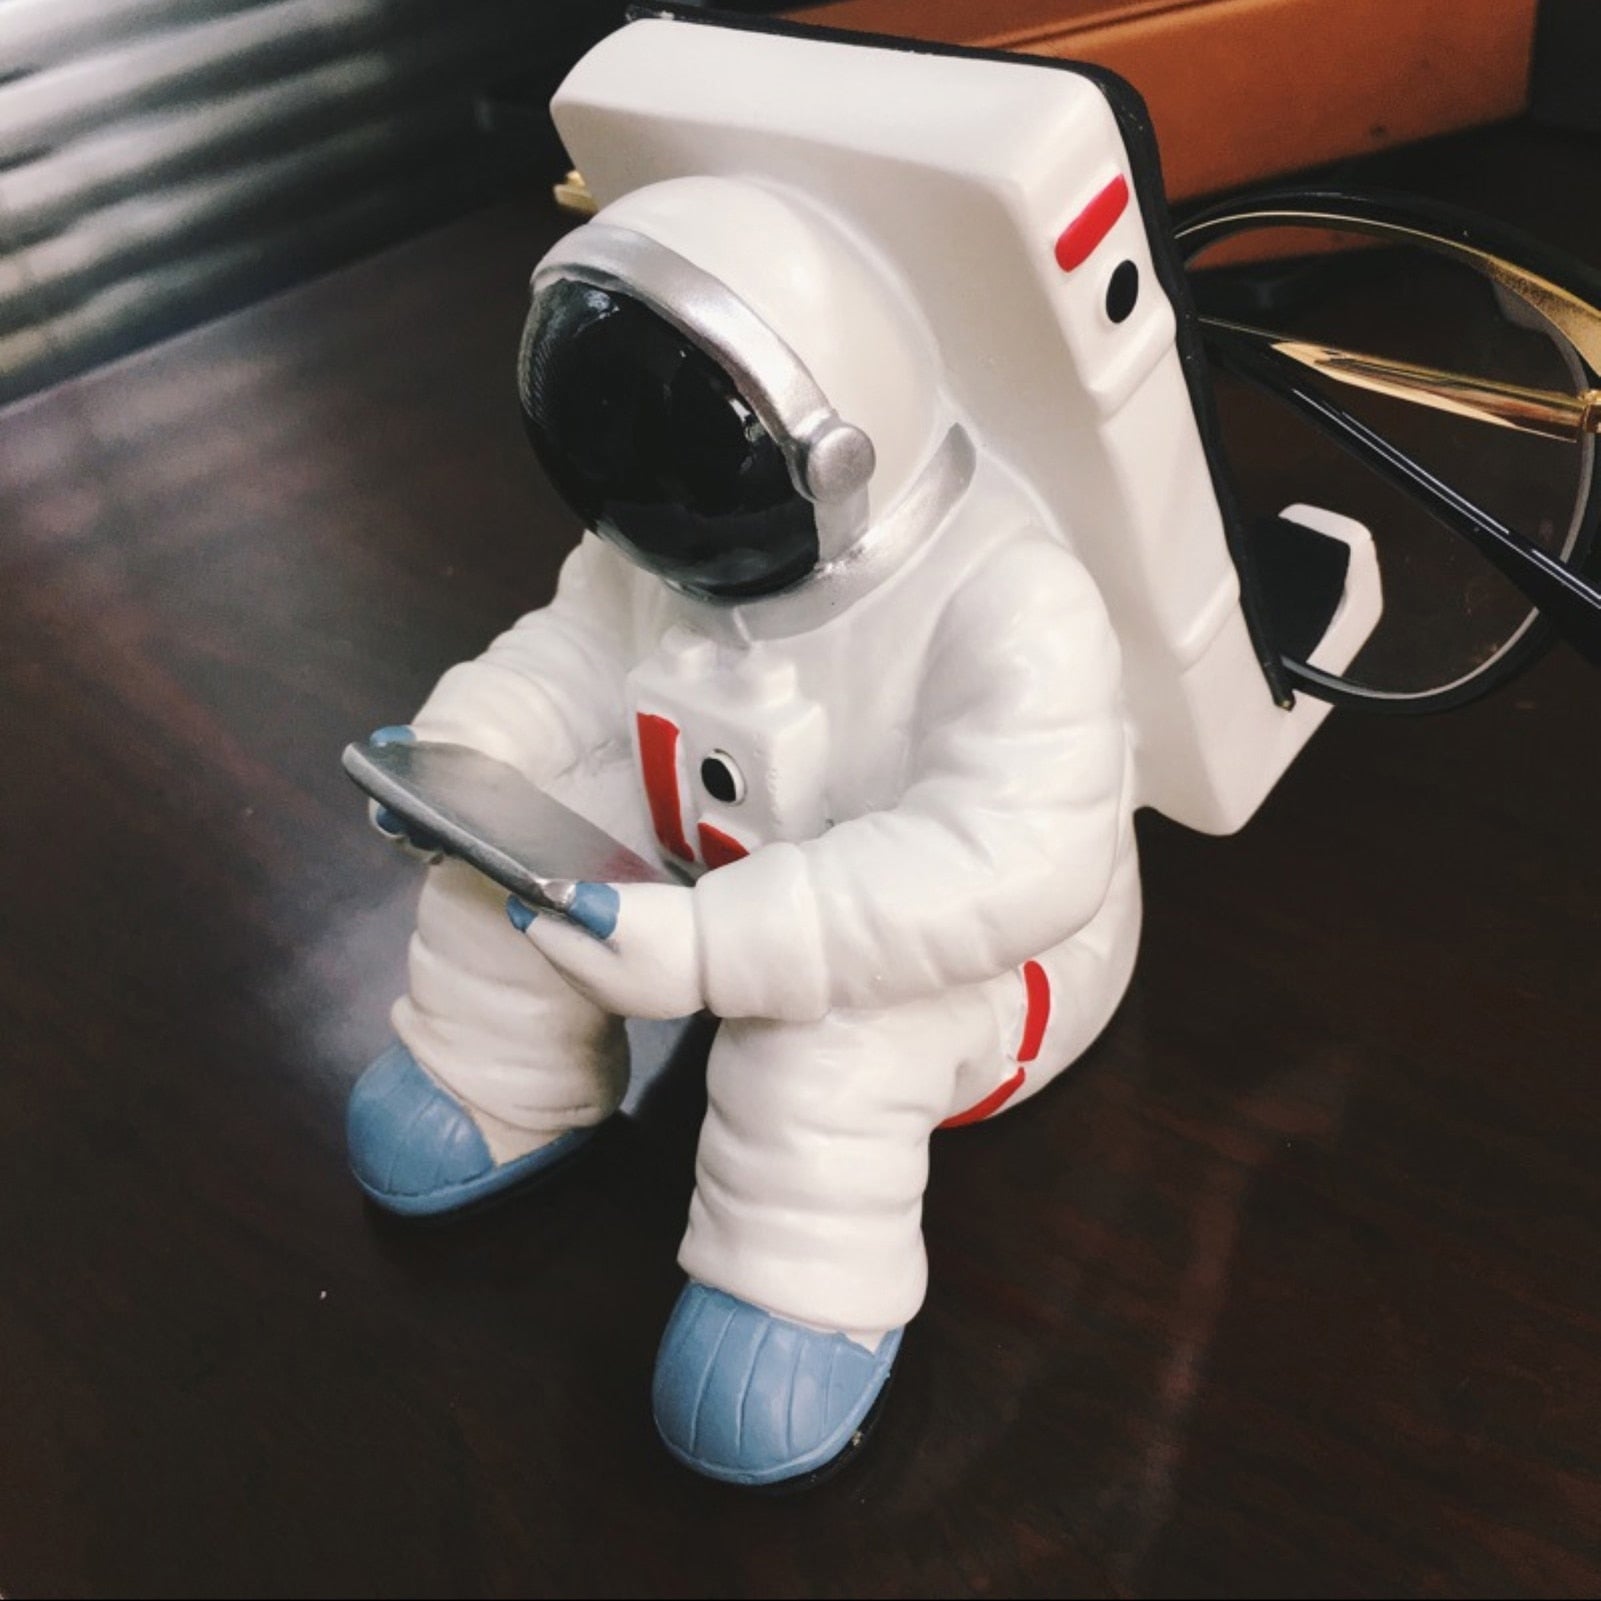 Creative Astronaut Mobile Phone Holder